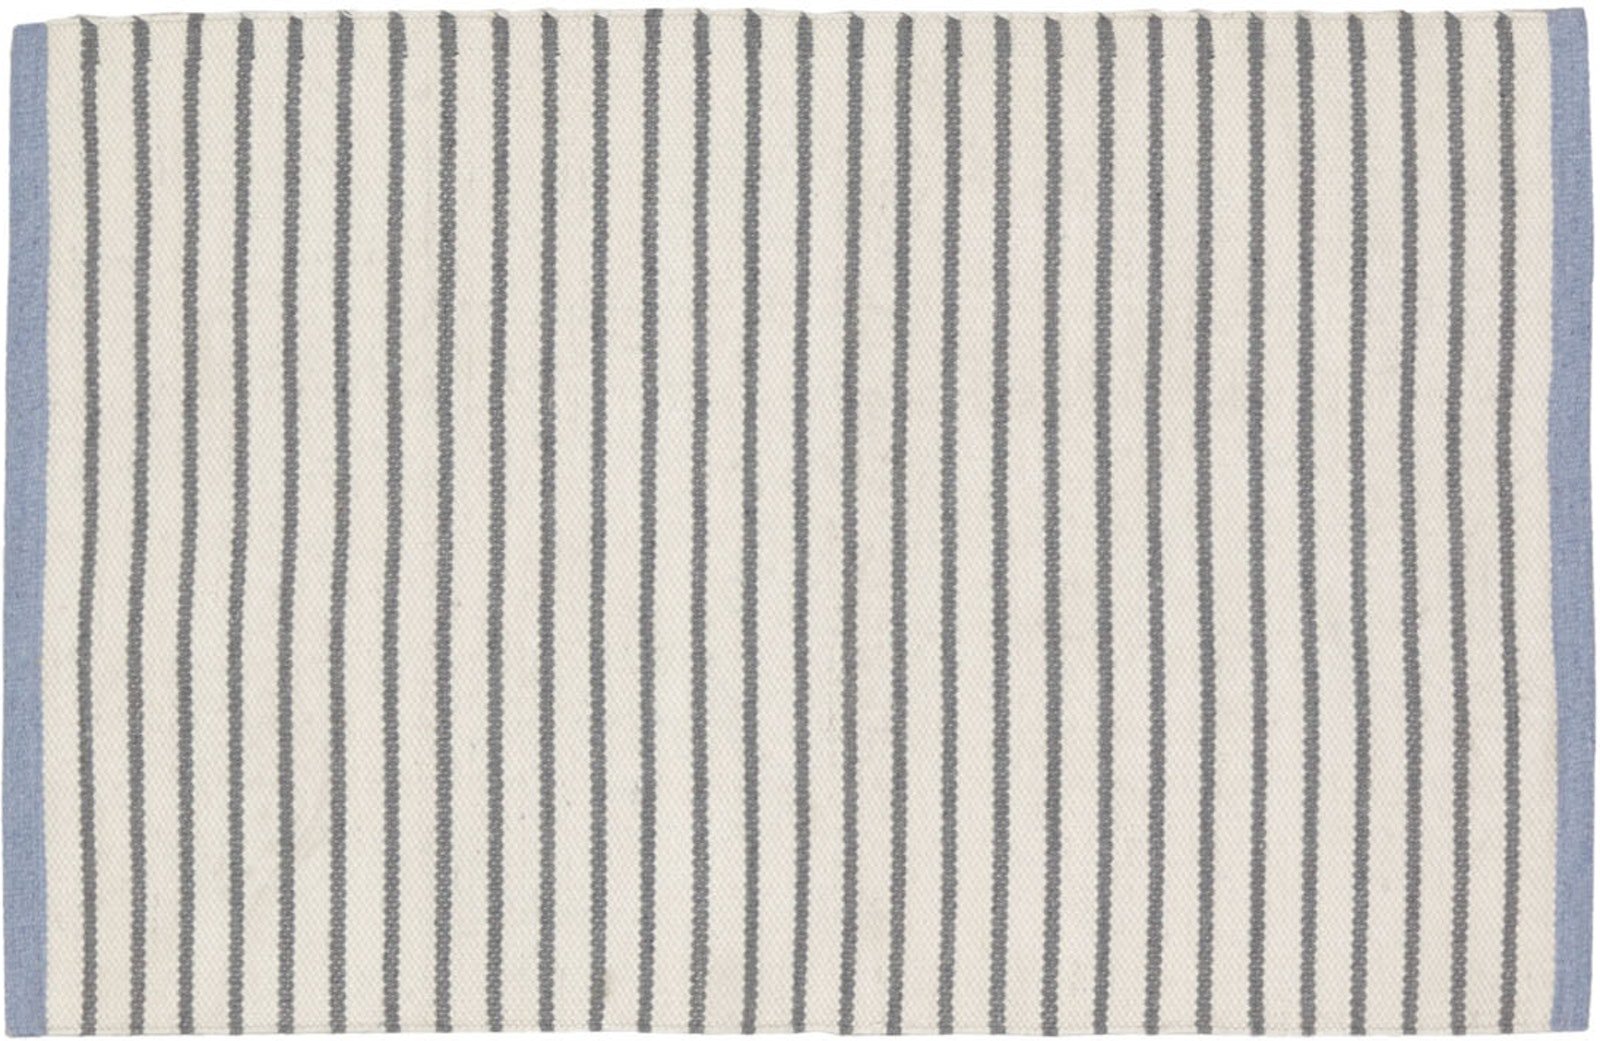 Catiana, Tæppe, moderne, nordisk, stof by LaForma (H: 1 cm. B: 60 cm. L: 90 cm., Grå)